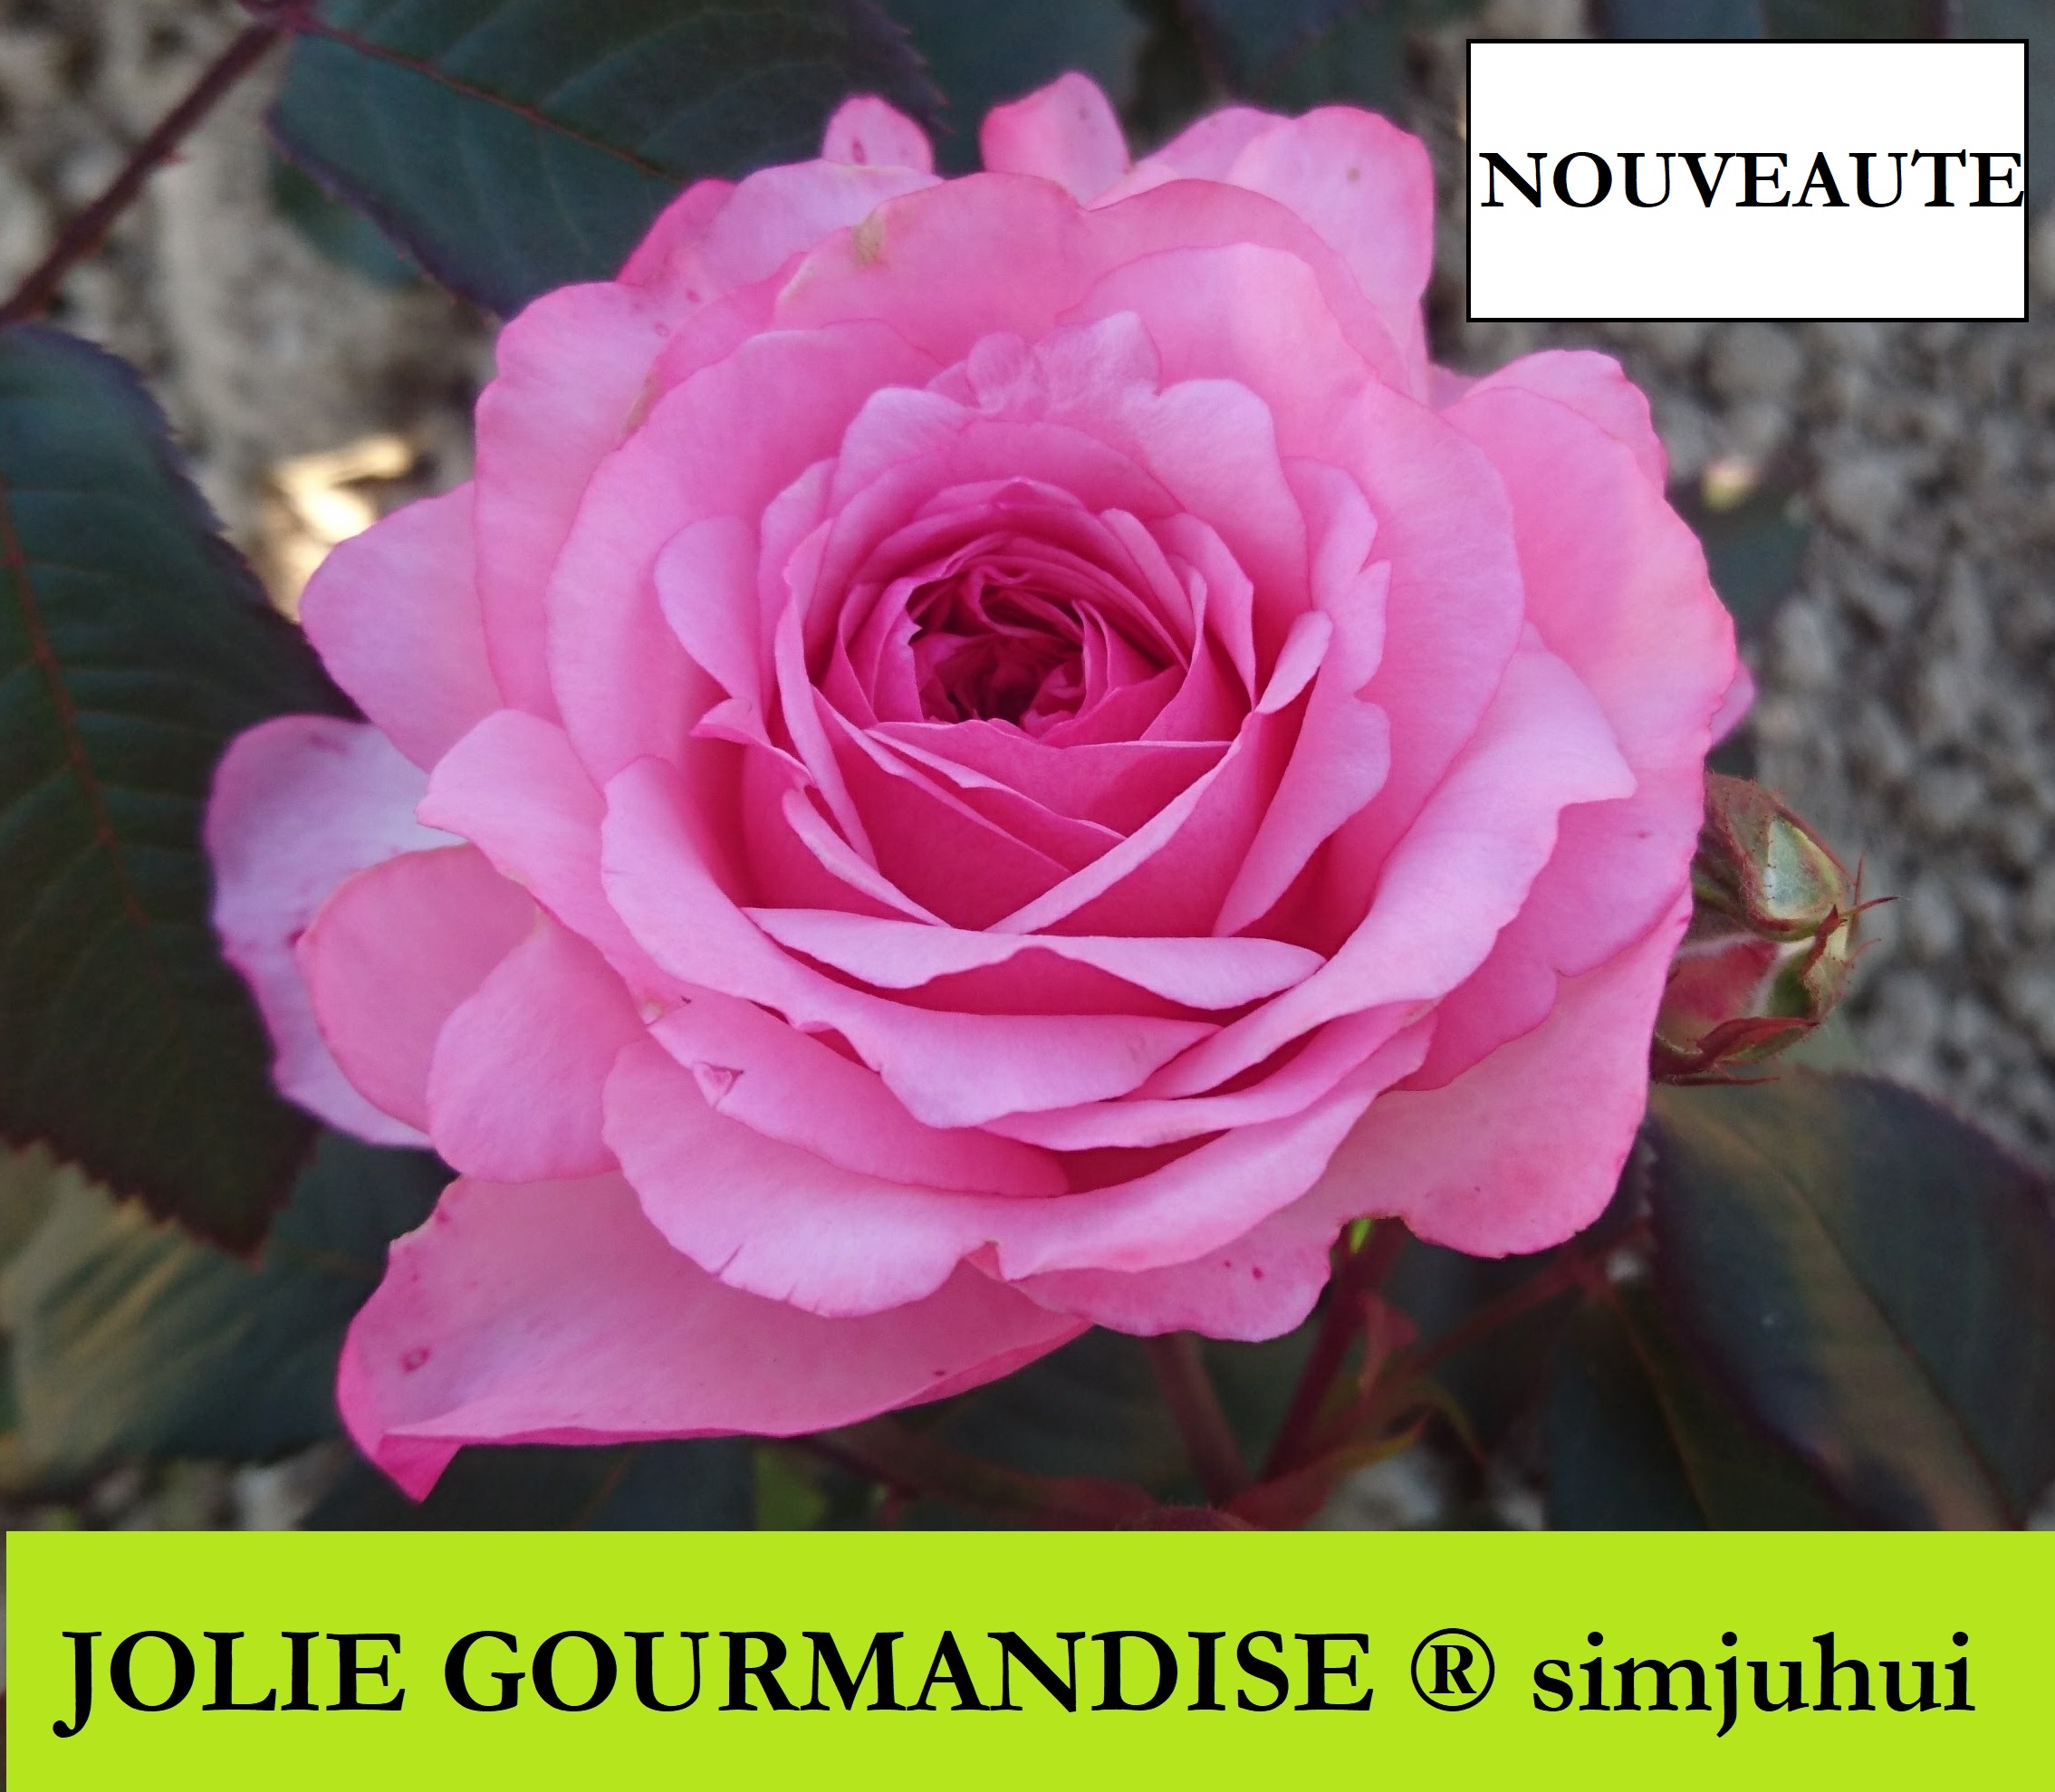 JOLIE GOURMANDISE &#x000000ae; simjuhui CONTENEUR 4L